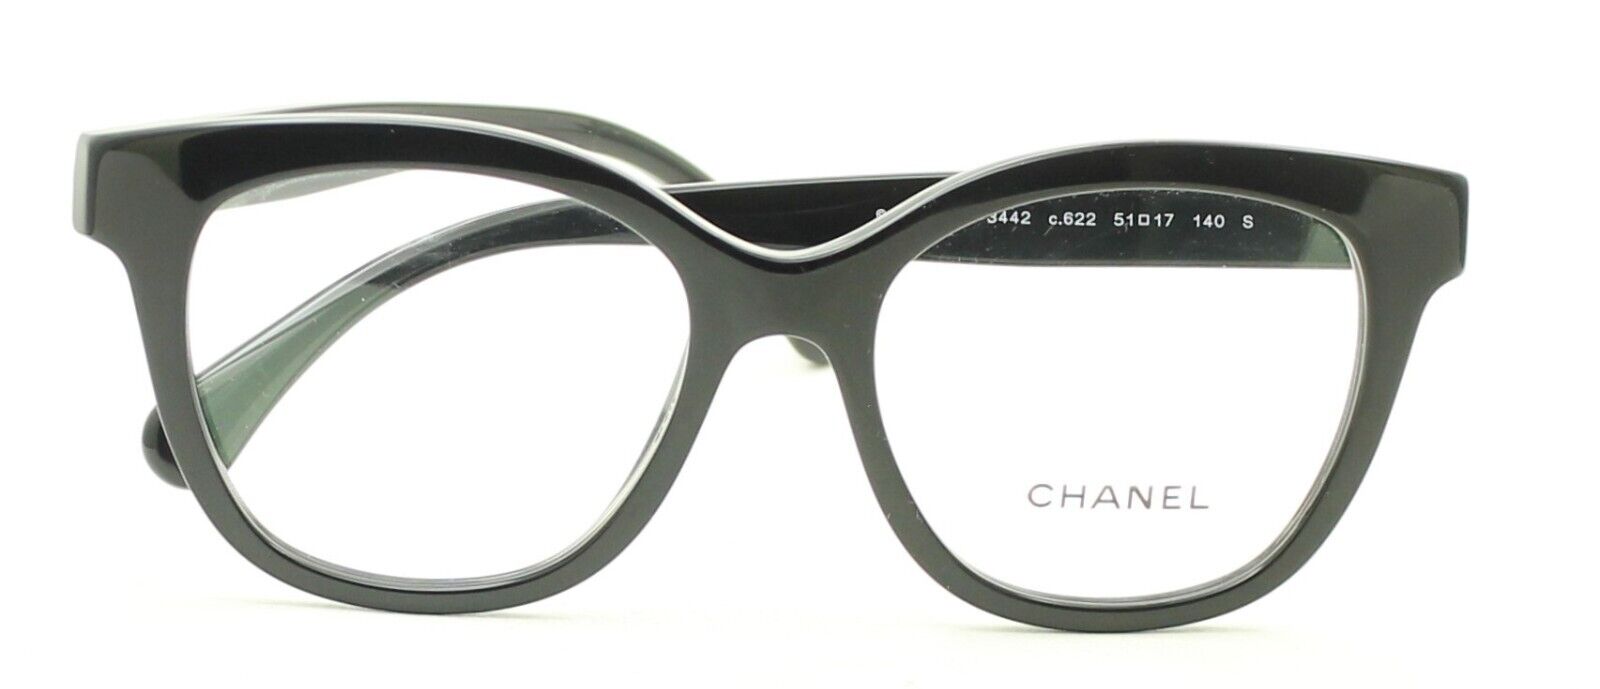 new chanel eyeglasses